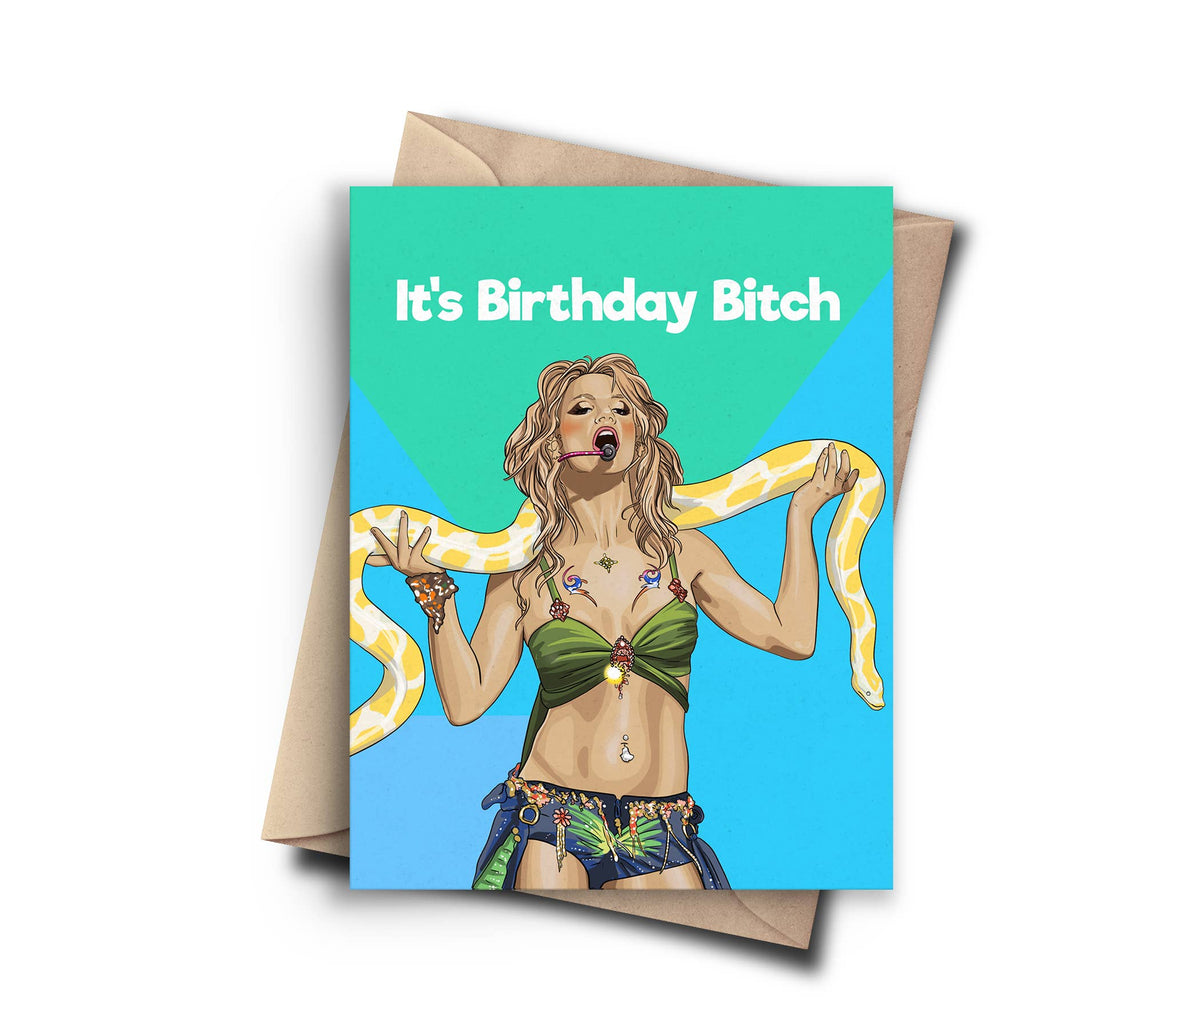 Funny Birthday Card - Free Britney Spears Pop Culture Card